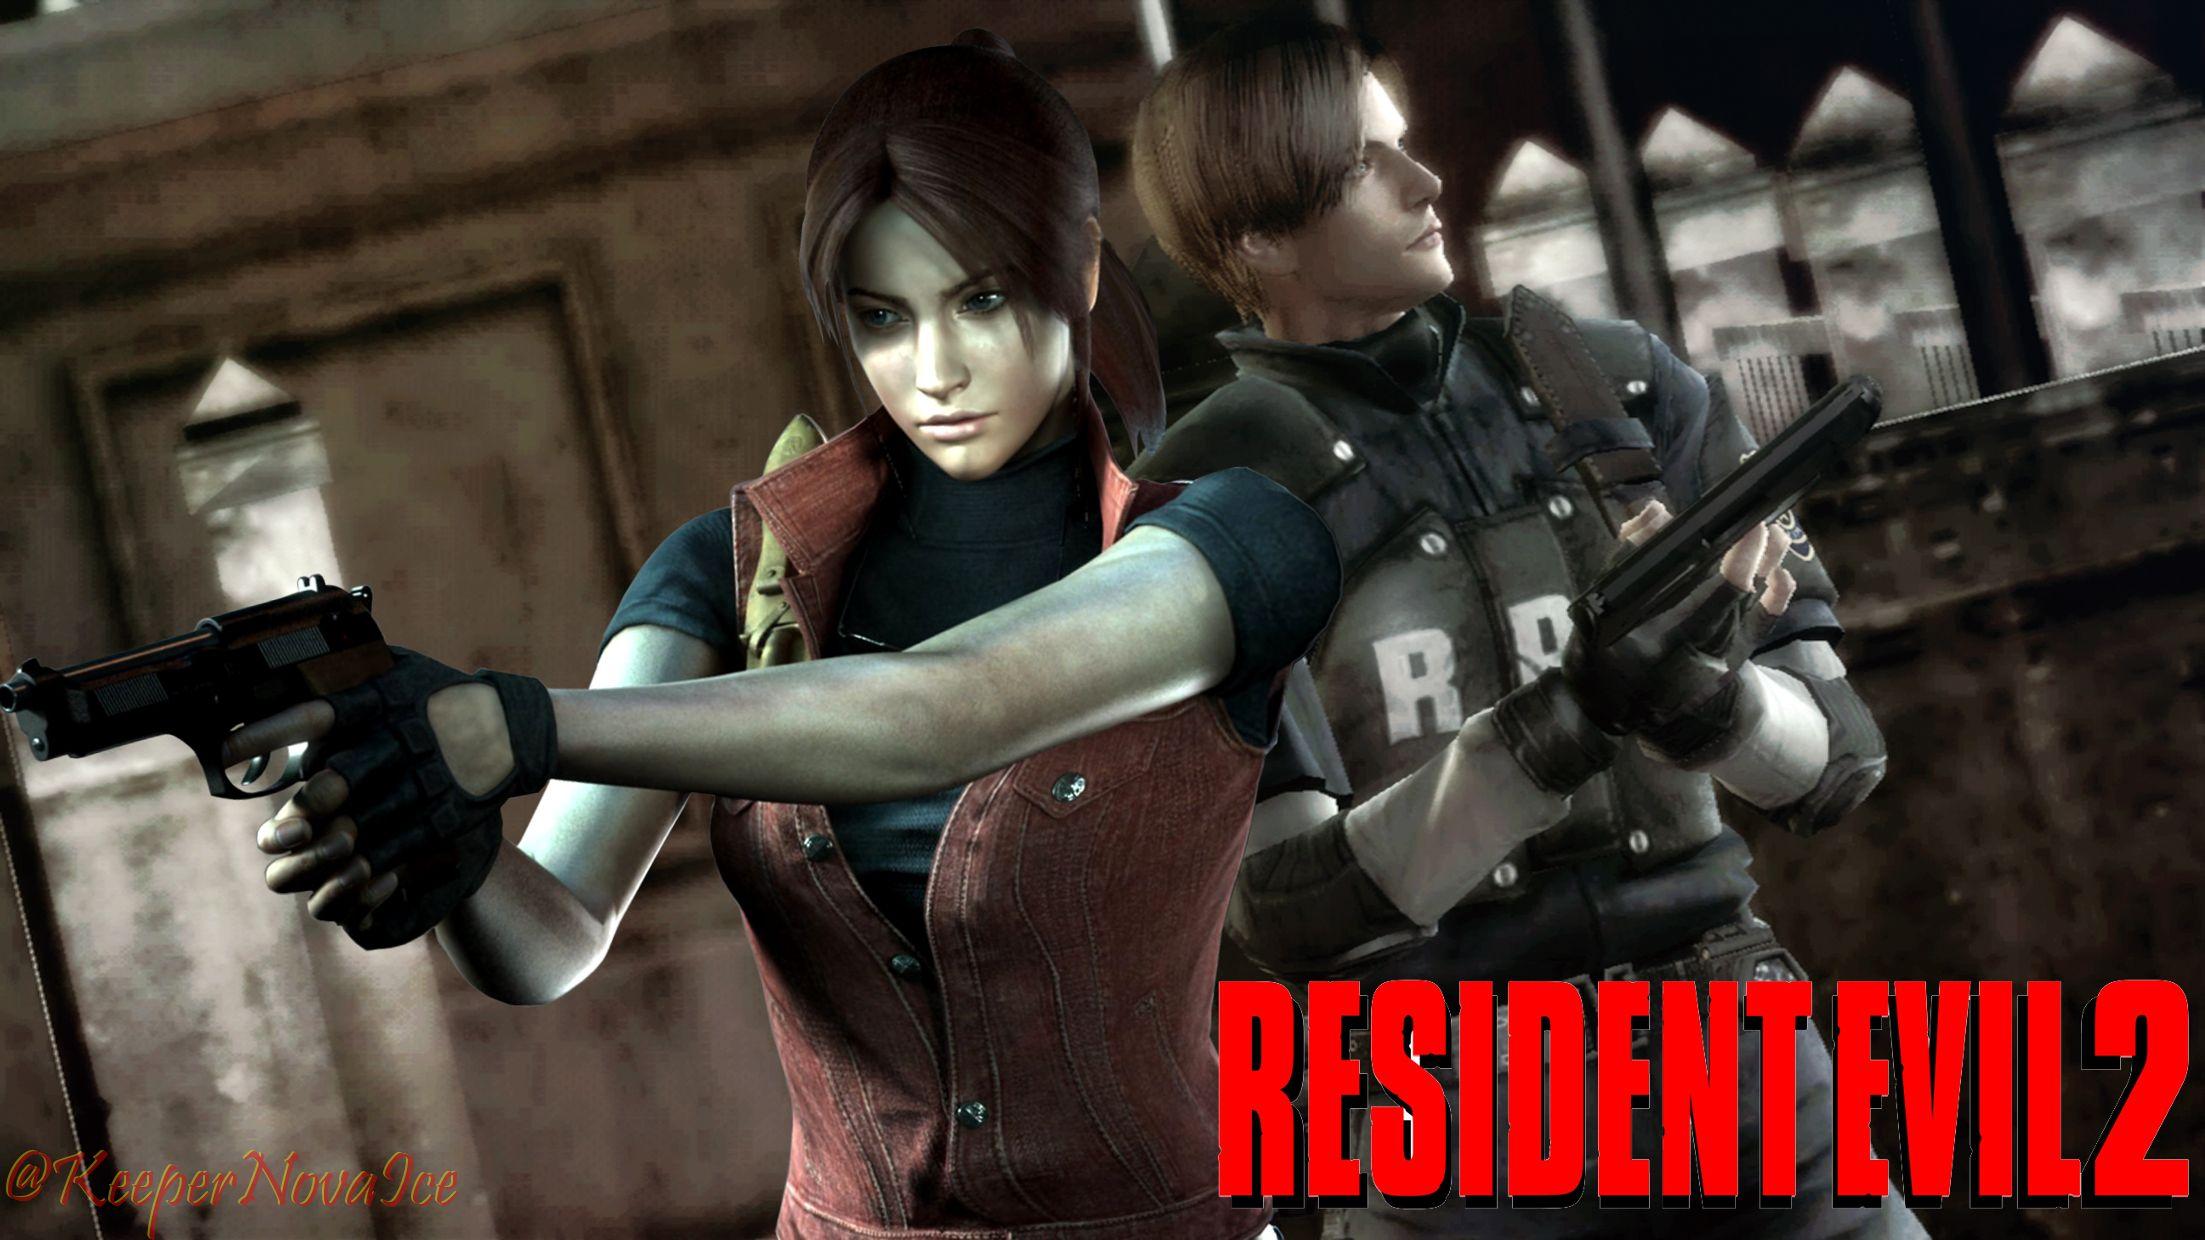 Capcom Confirms Resident Evil 2 Remake Instead Of Remaster